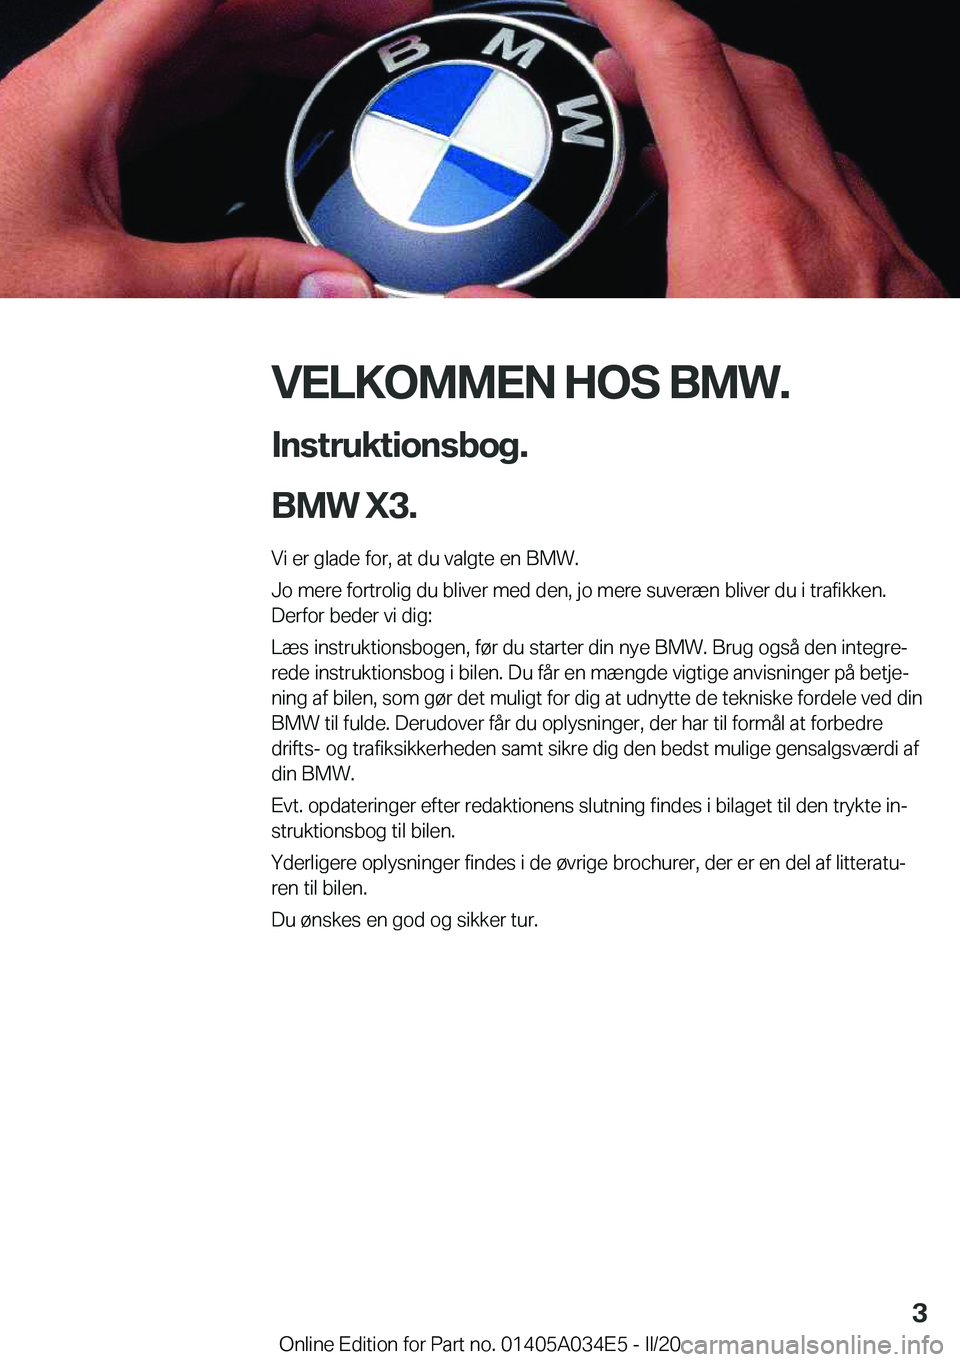 BMW X3 2020  InstruktionsbØger (in Danish) �V�E�L�K�O�M�M�E�N��H�O�S��B�M�W�.
�I�n�s�t�r�u�k�t�i�o�n�s�b�o�g�.
�B�M�W��X�3�. �V�i��e�r��g�l�a�d�e��f�o�r�,��a�t��d�u��v�a�l�g�t�e��e�n��B�M�W�.
�J�o��m�e�r�e��f�o�r�t�r�o�l�i�g��d�u